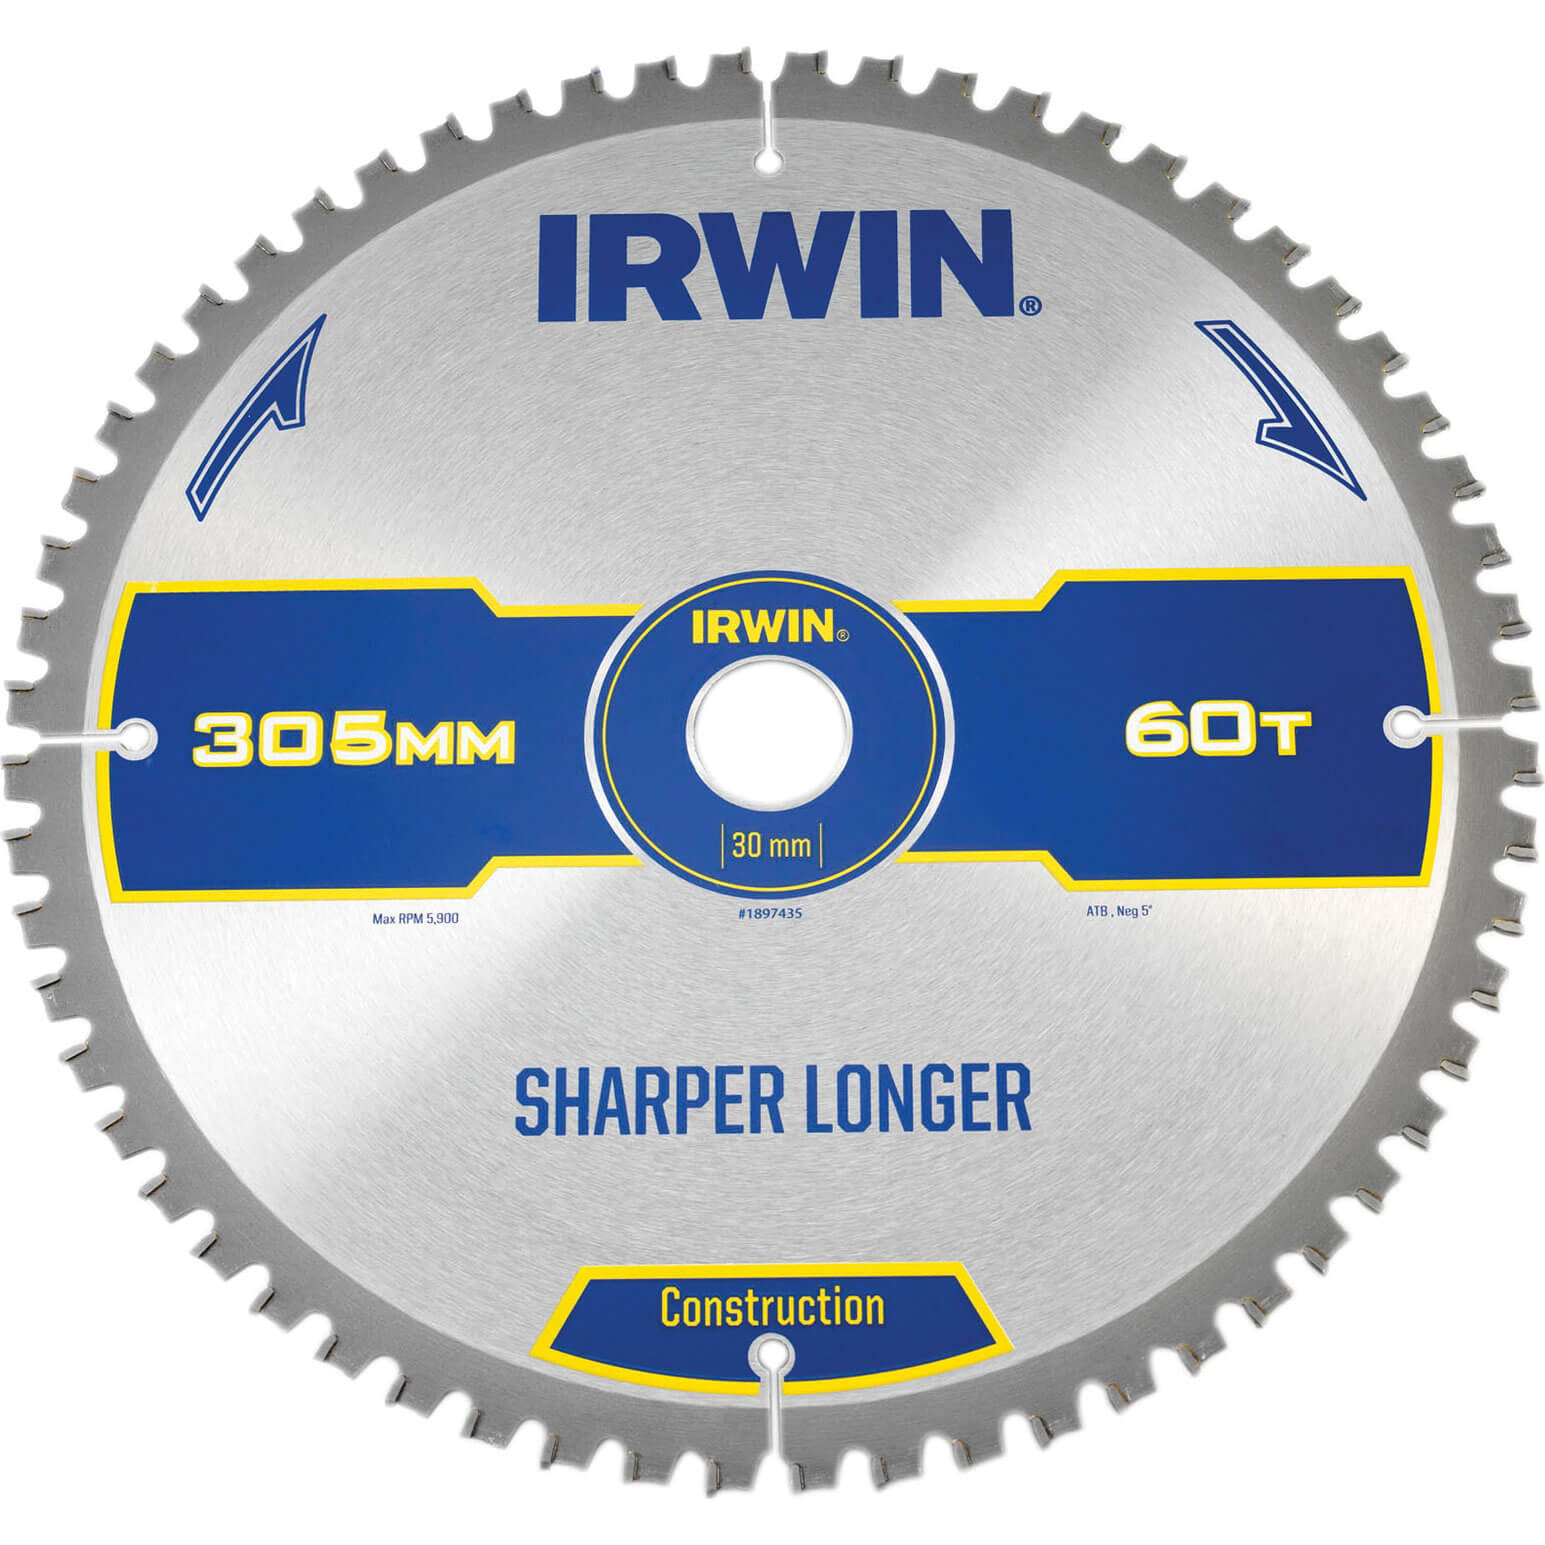 Irwin ATB Ultra Construction Circular Saw Blade 305mm 60T 30mm